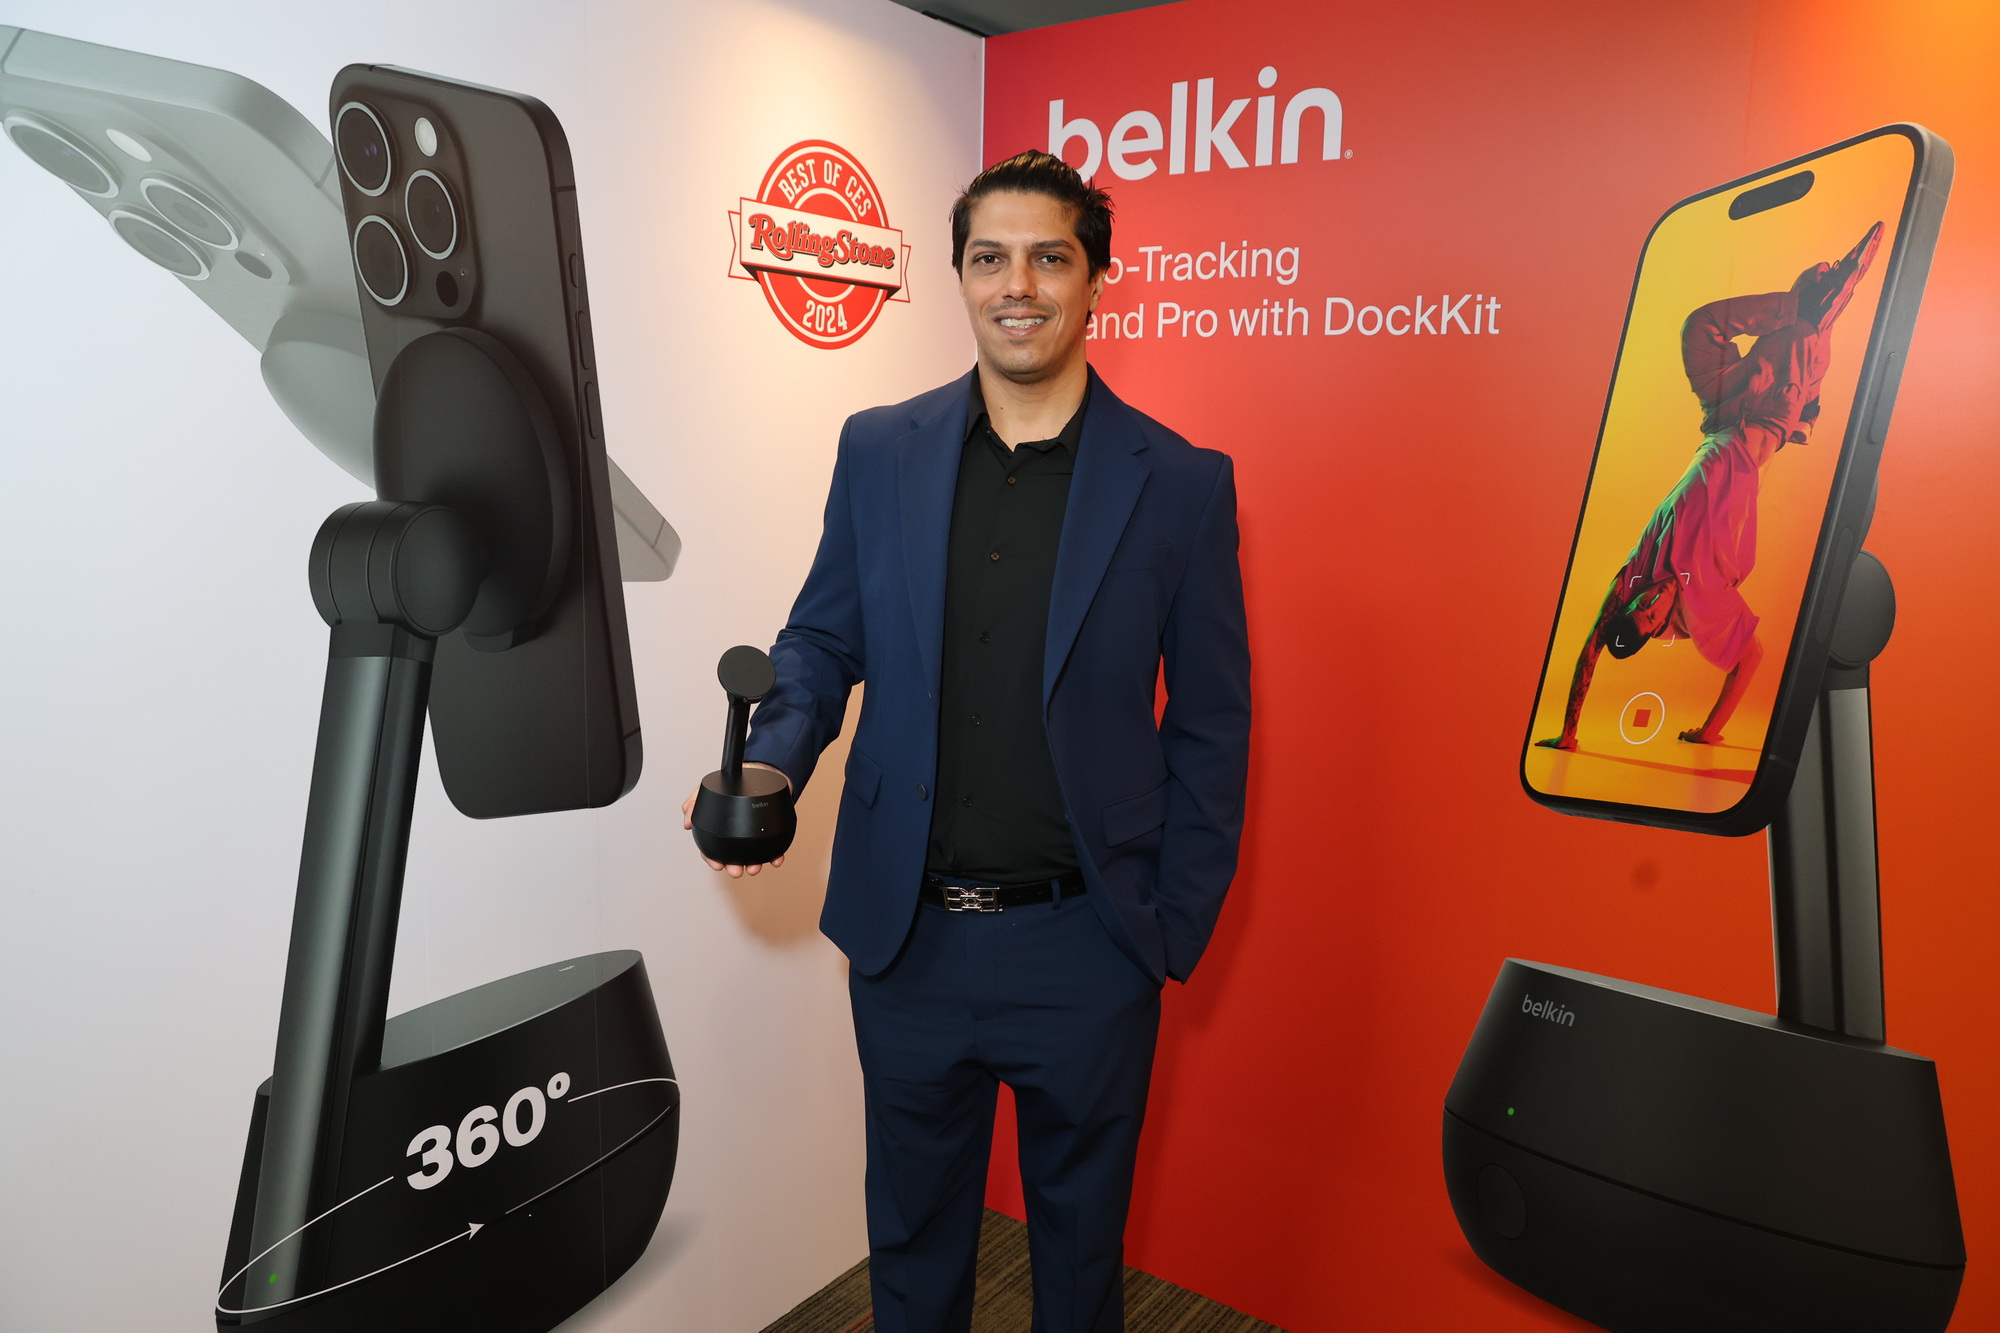 Belkin รบกวนขอฝากข่าวประชาสัมพันธ์ : Belkin เปิดตัวนวัตกรรมแท่นวางไอโฟน Auto-Tracking Stand Pro และแท่นชาร์จมาตรฐาน Qi2